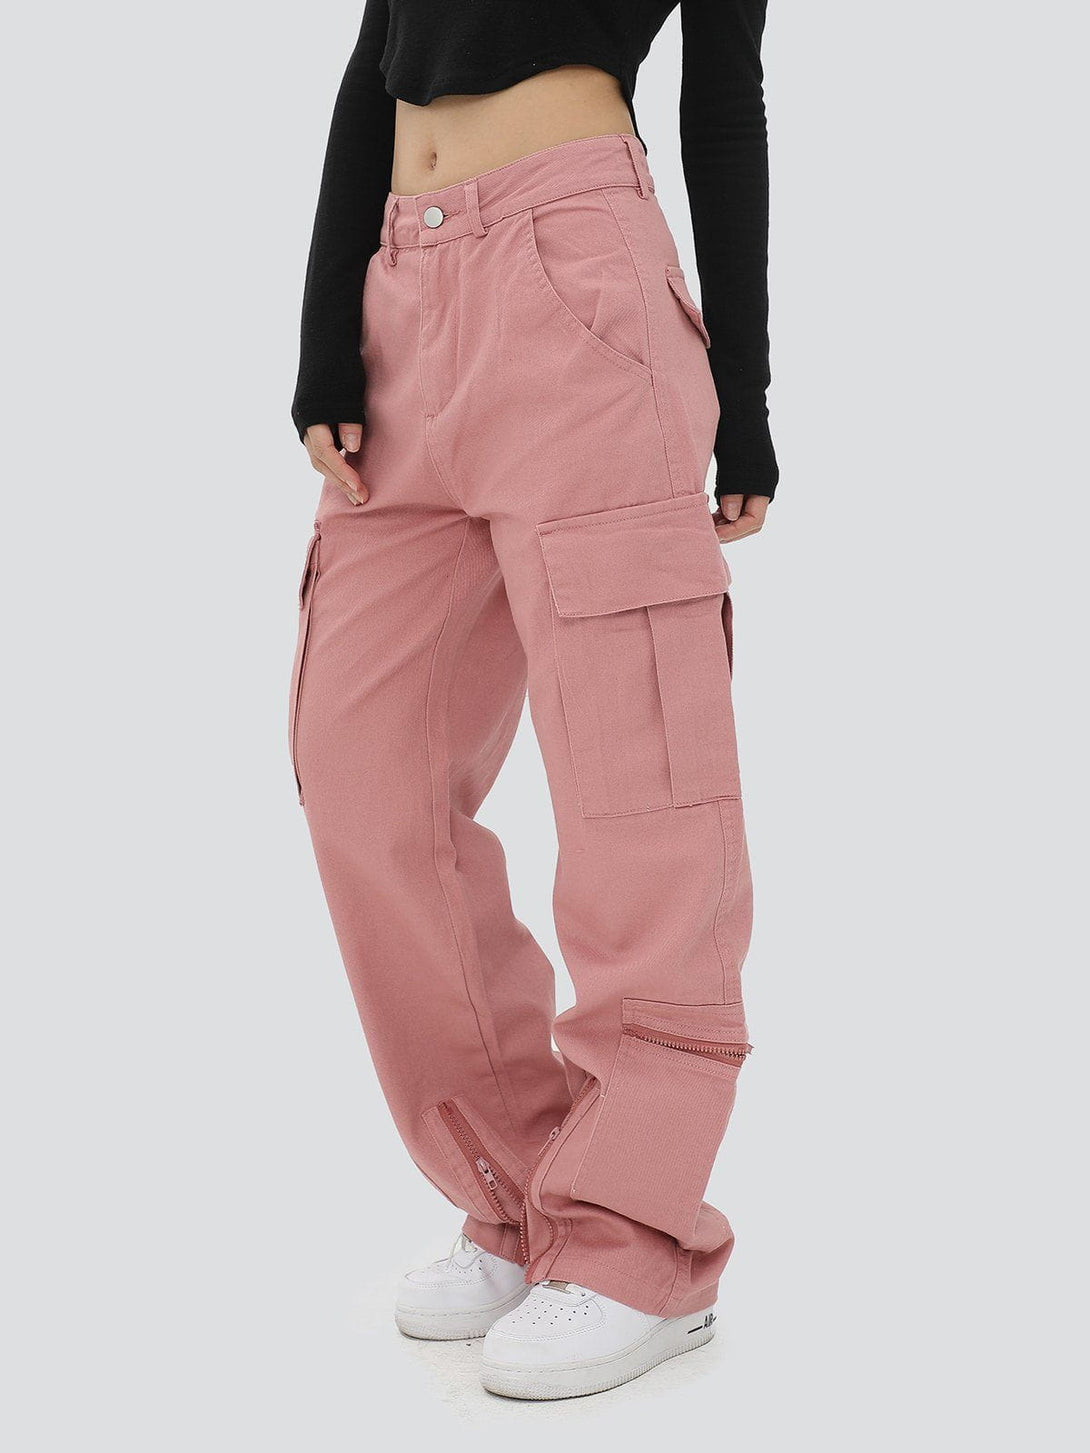 Levefly - Multi-Pocket Split Pants - Streetwear Fashion - levefly.com